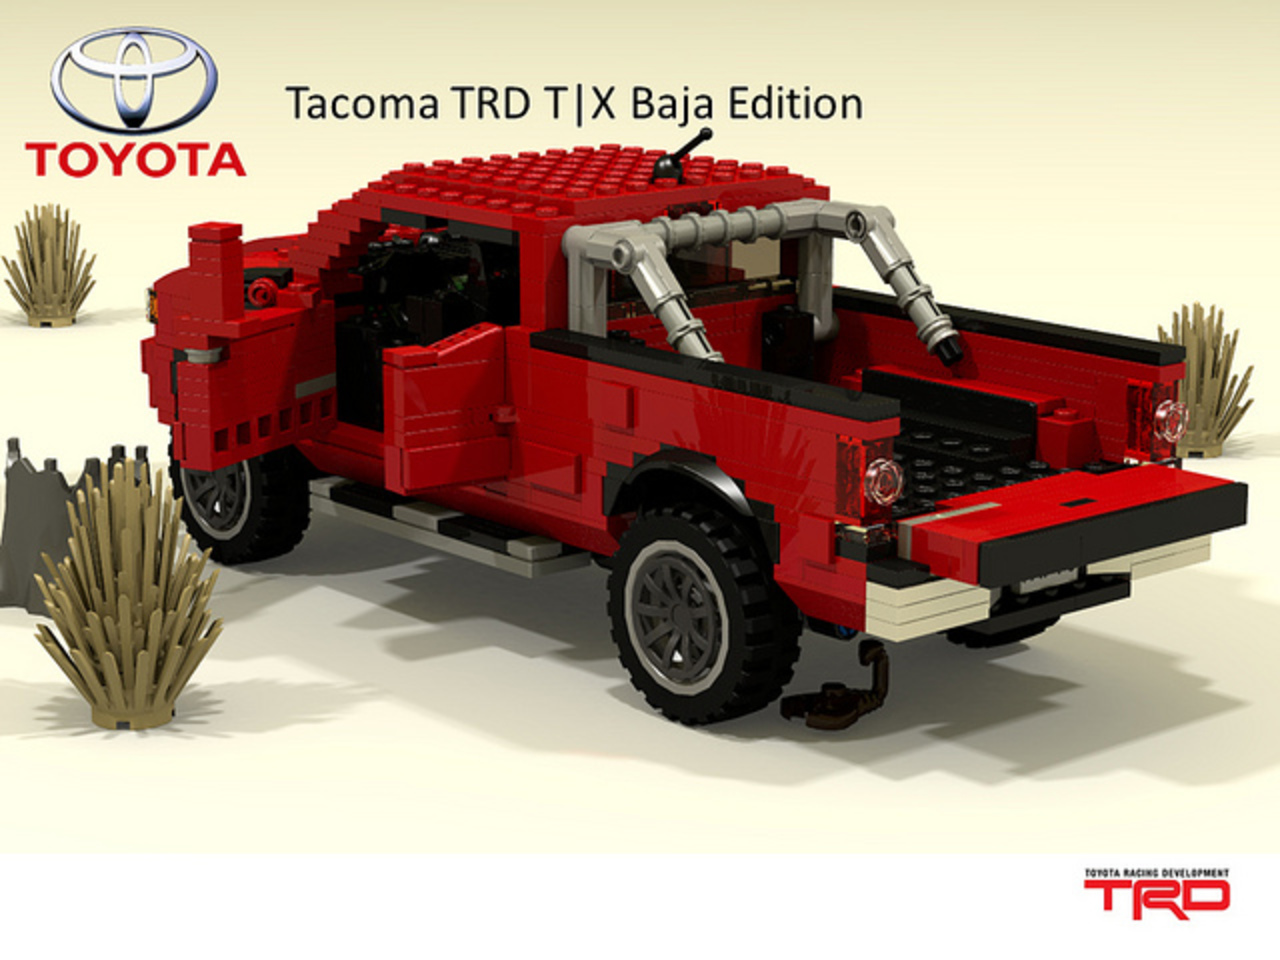 Toyota Tacoma TRD T /X Baja Edition / Flickr - Partage de photos!